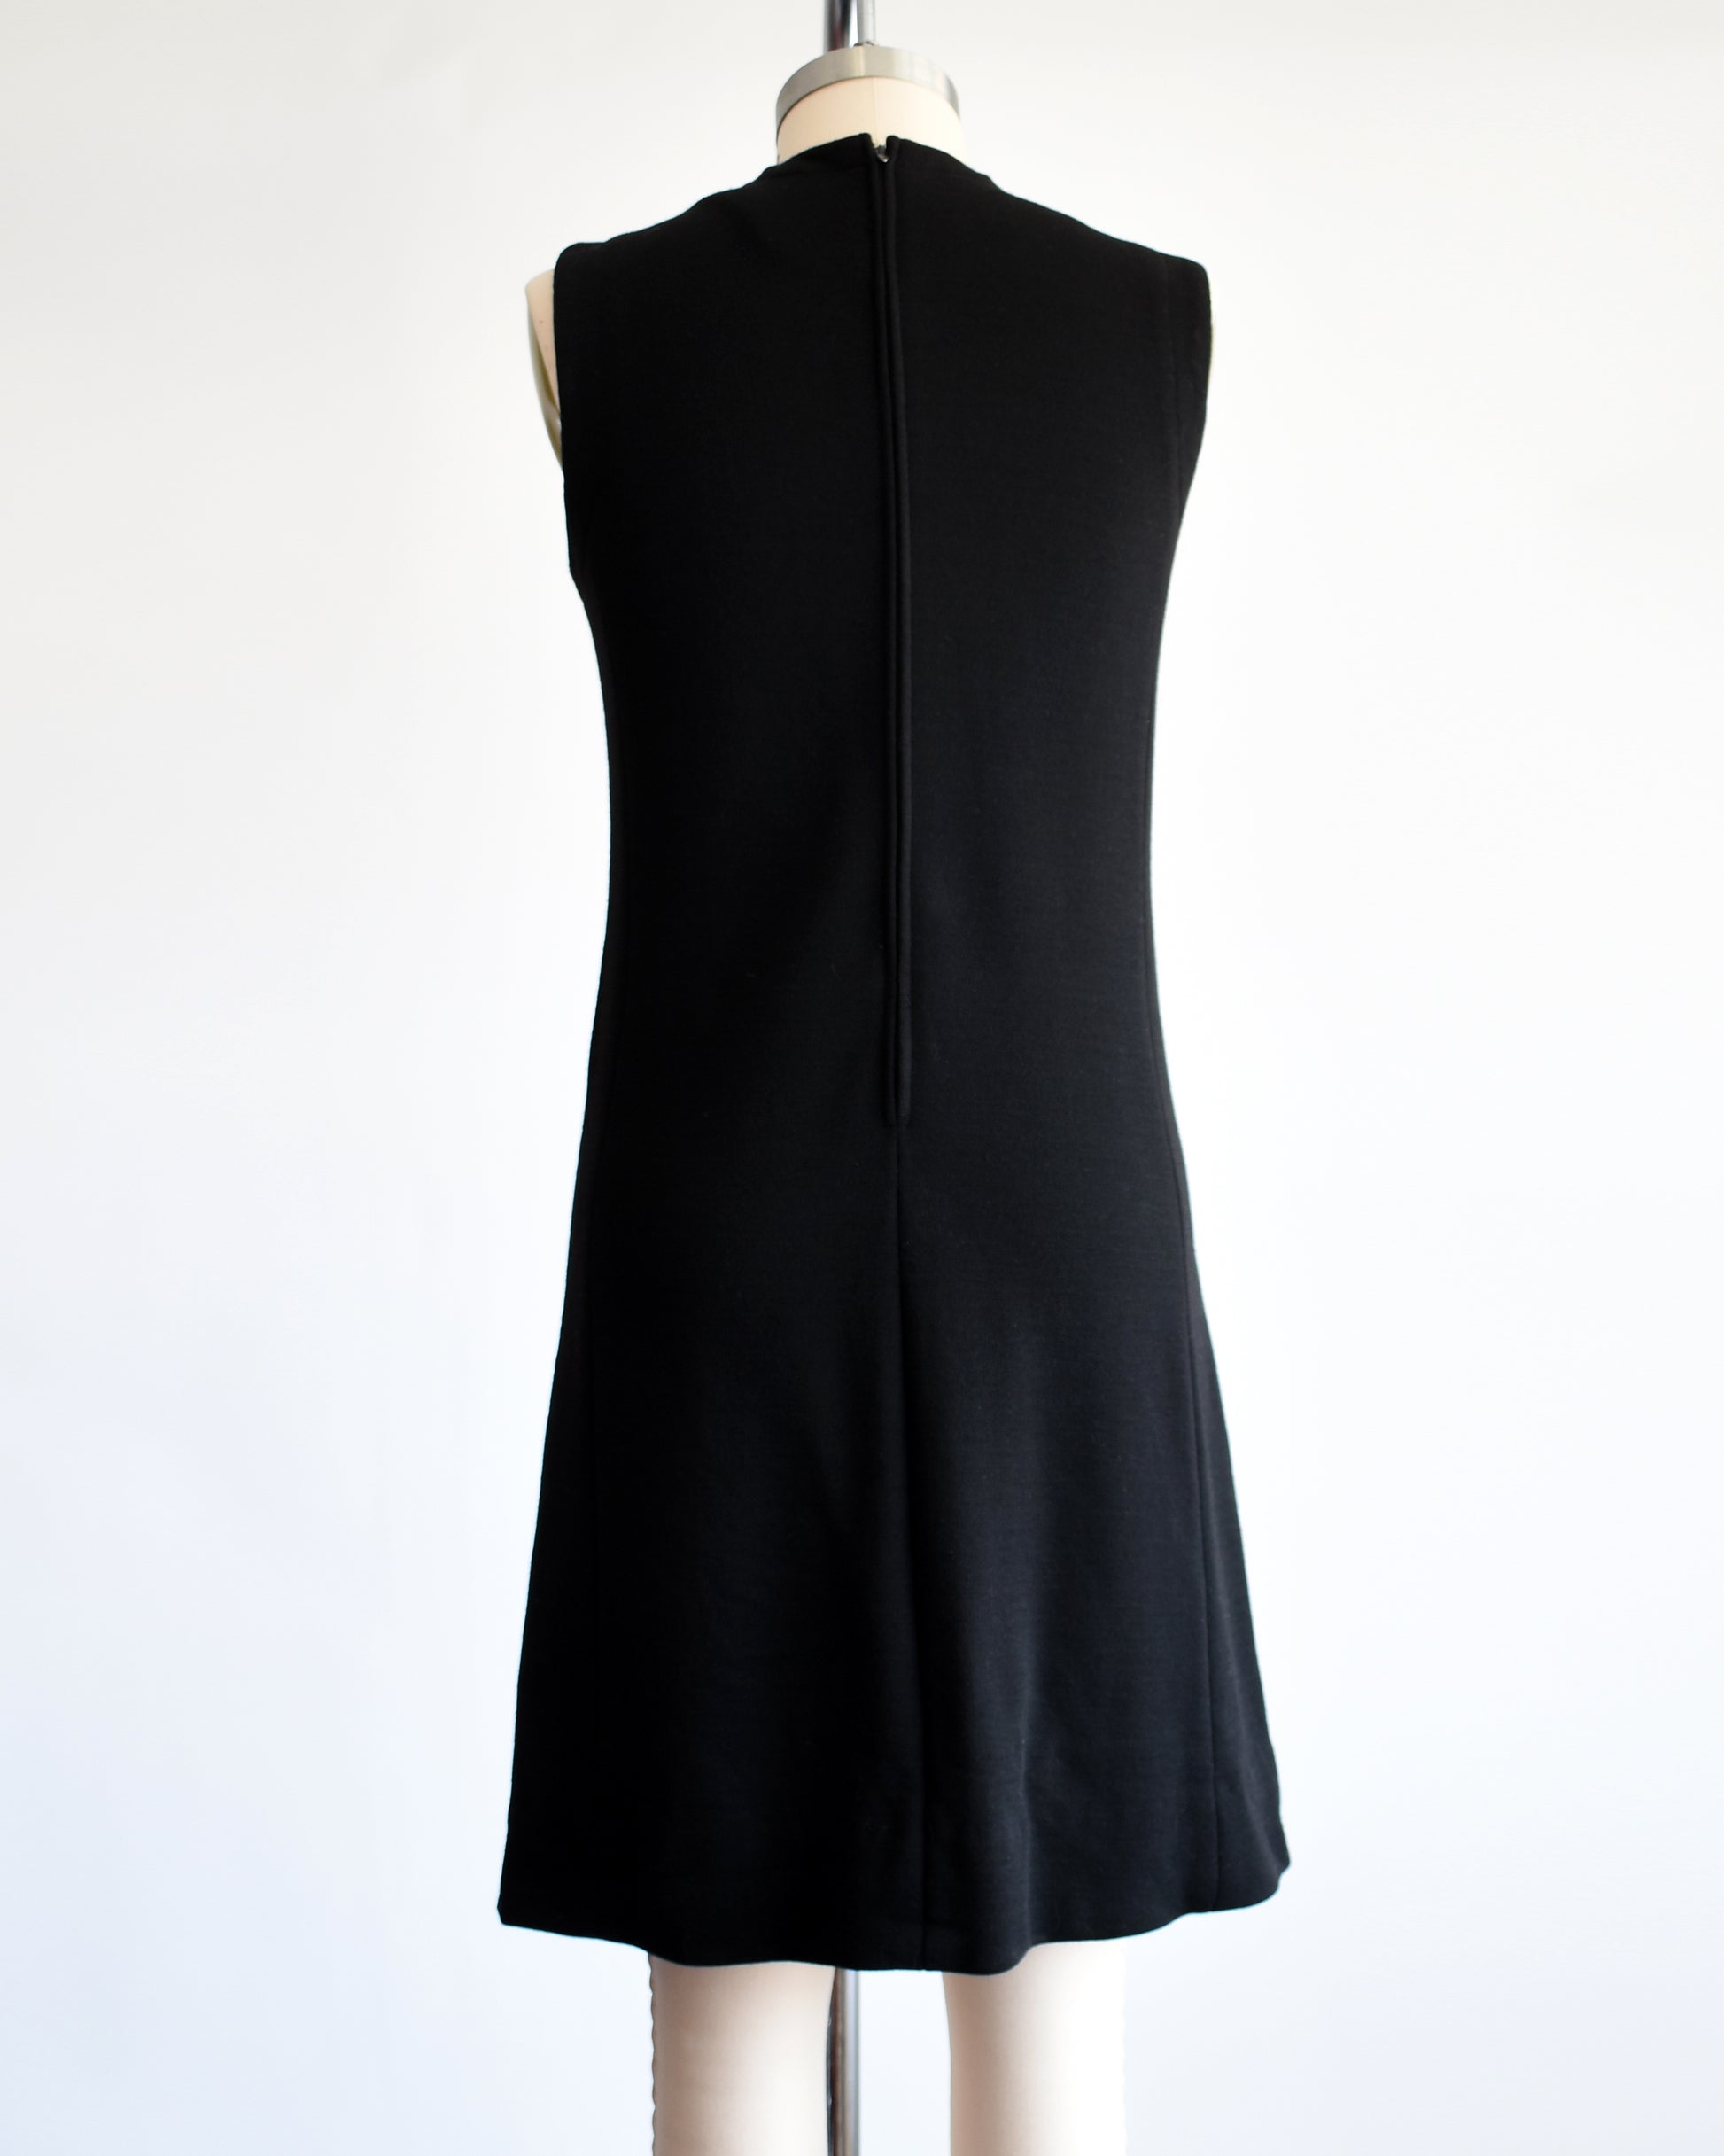 back view of  a vintage 1960s black keyhole rhinestone dress